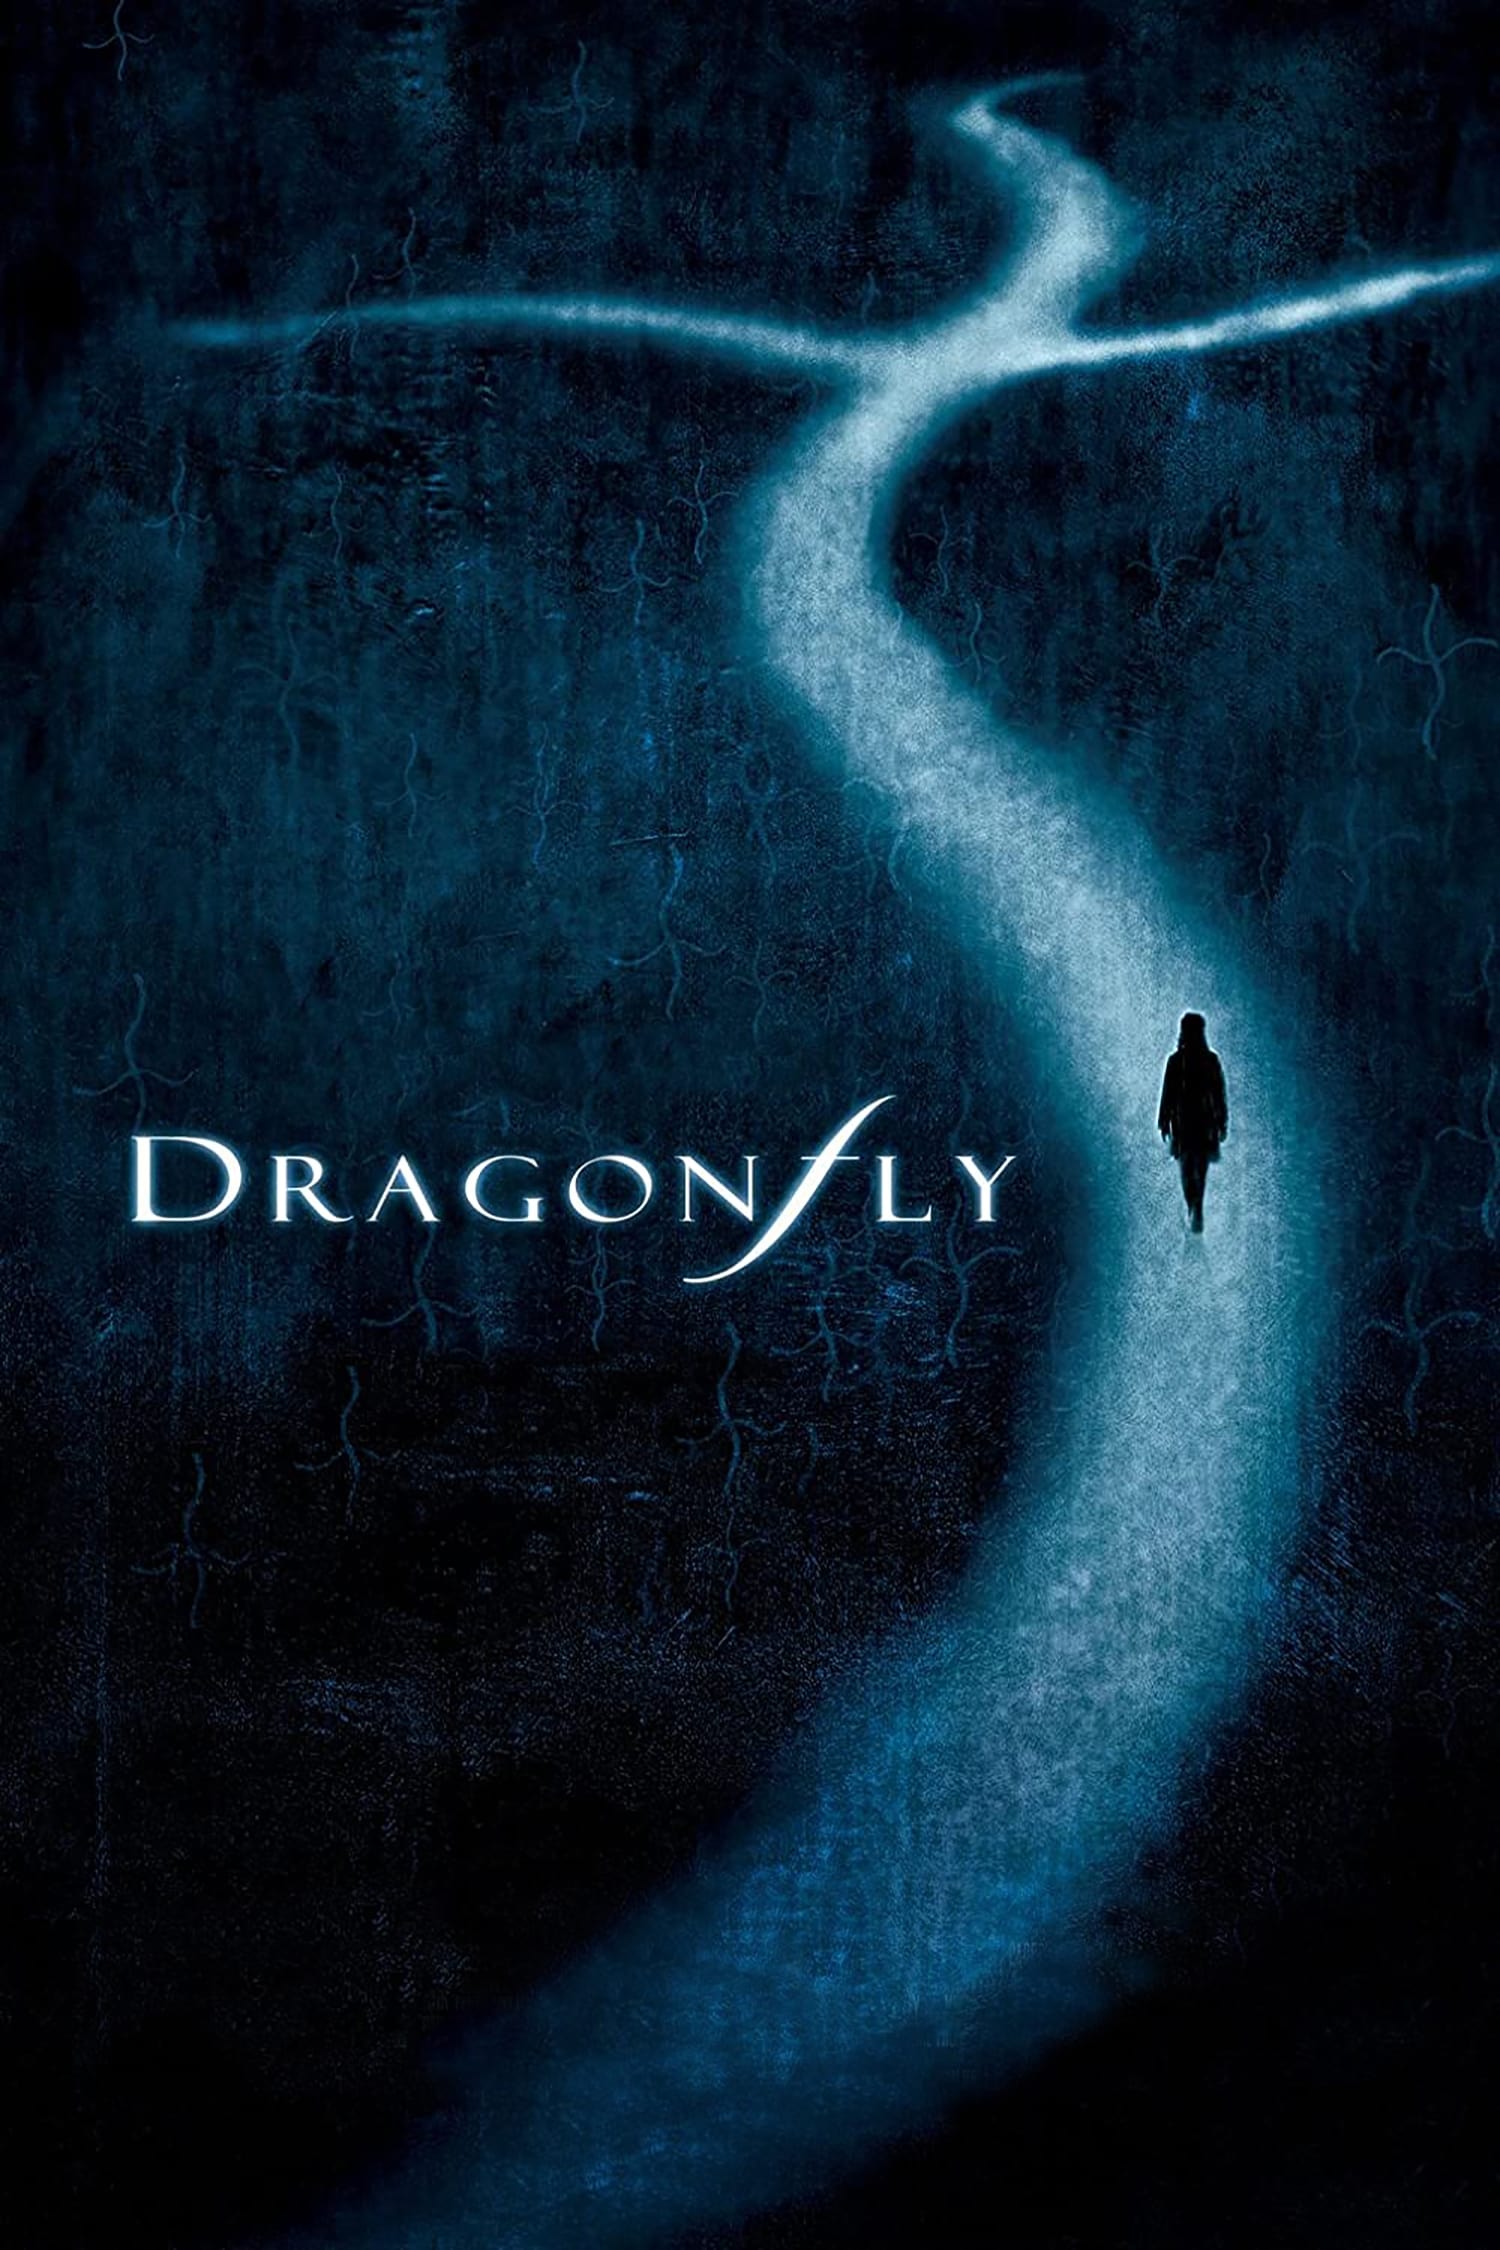 Dragonfly (La sombra de la libélula) (2002)